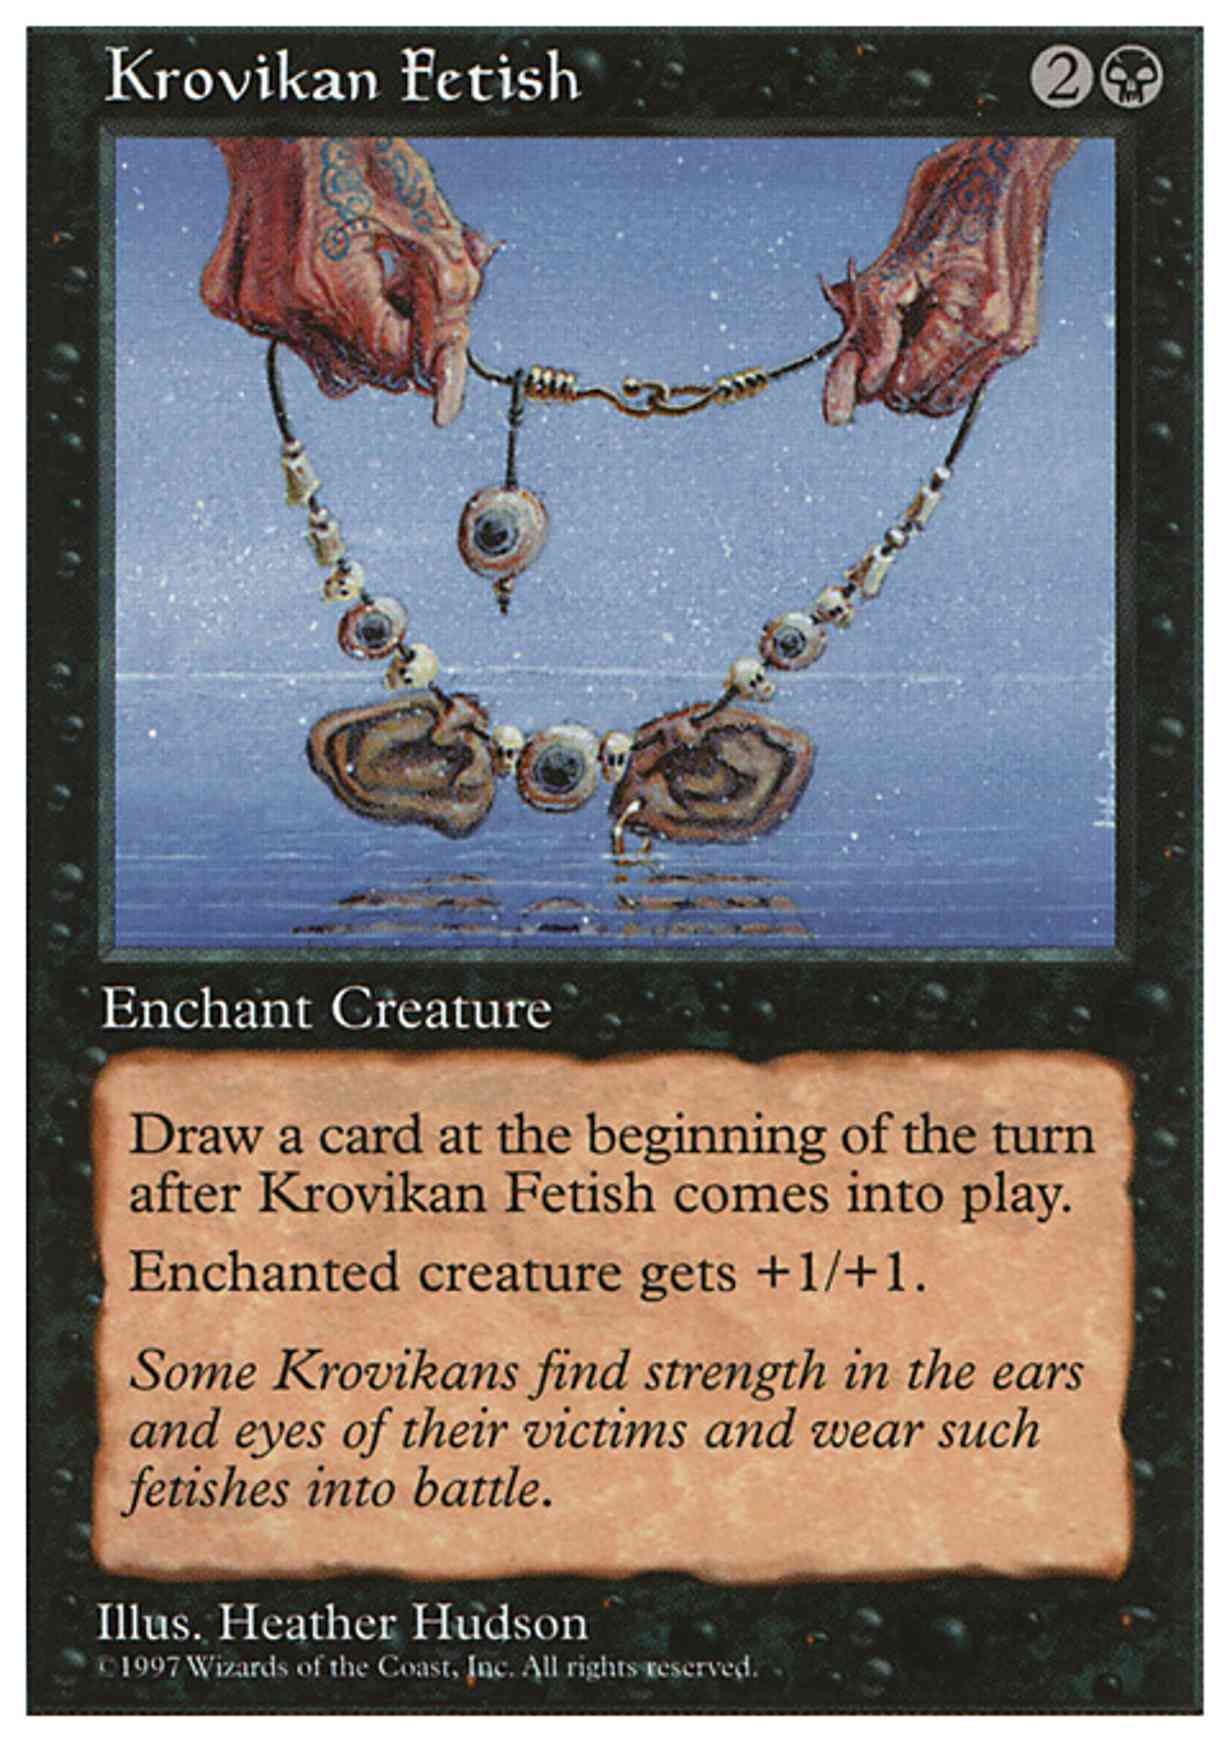 Krovikan Fetish magic card front